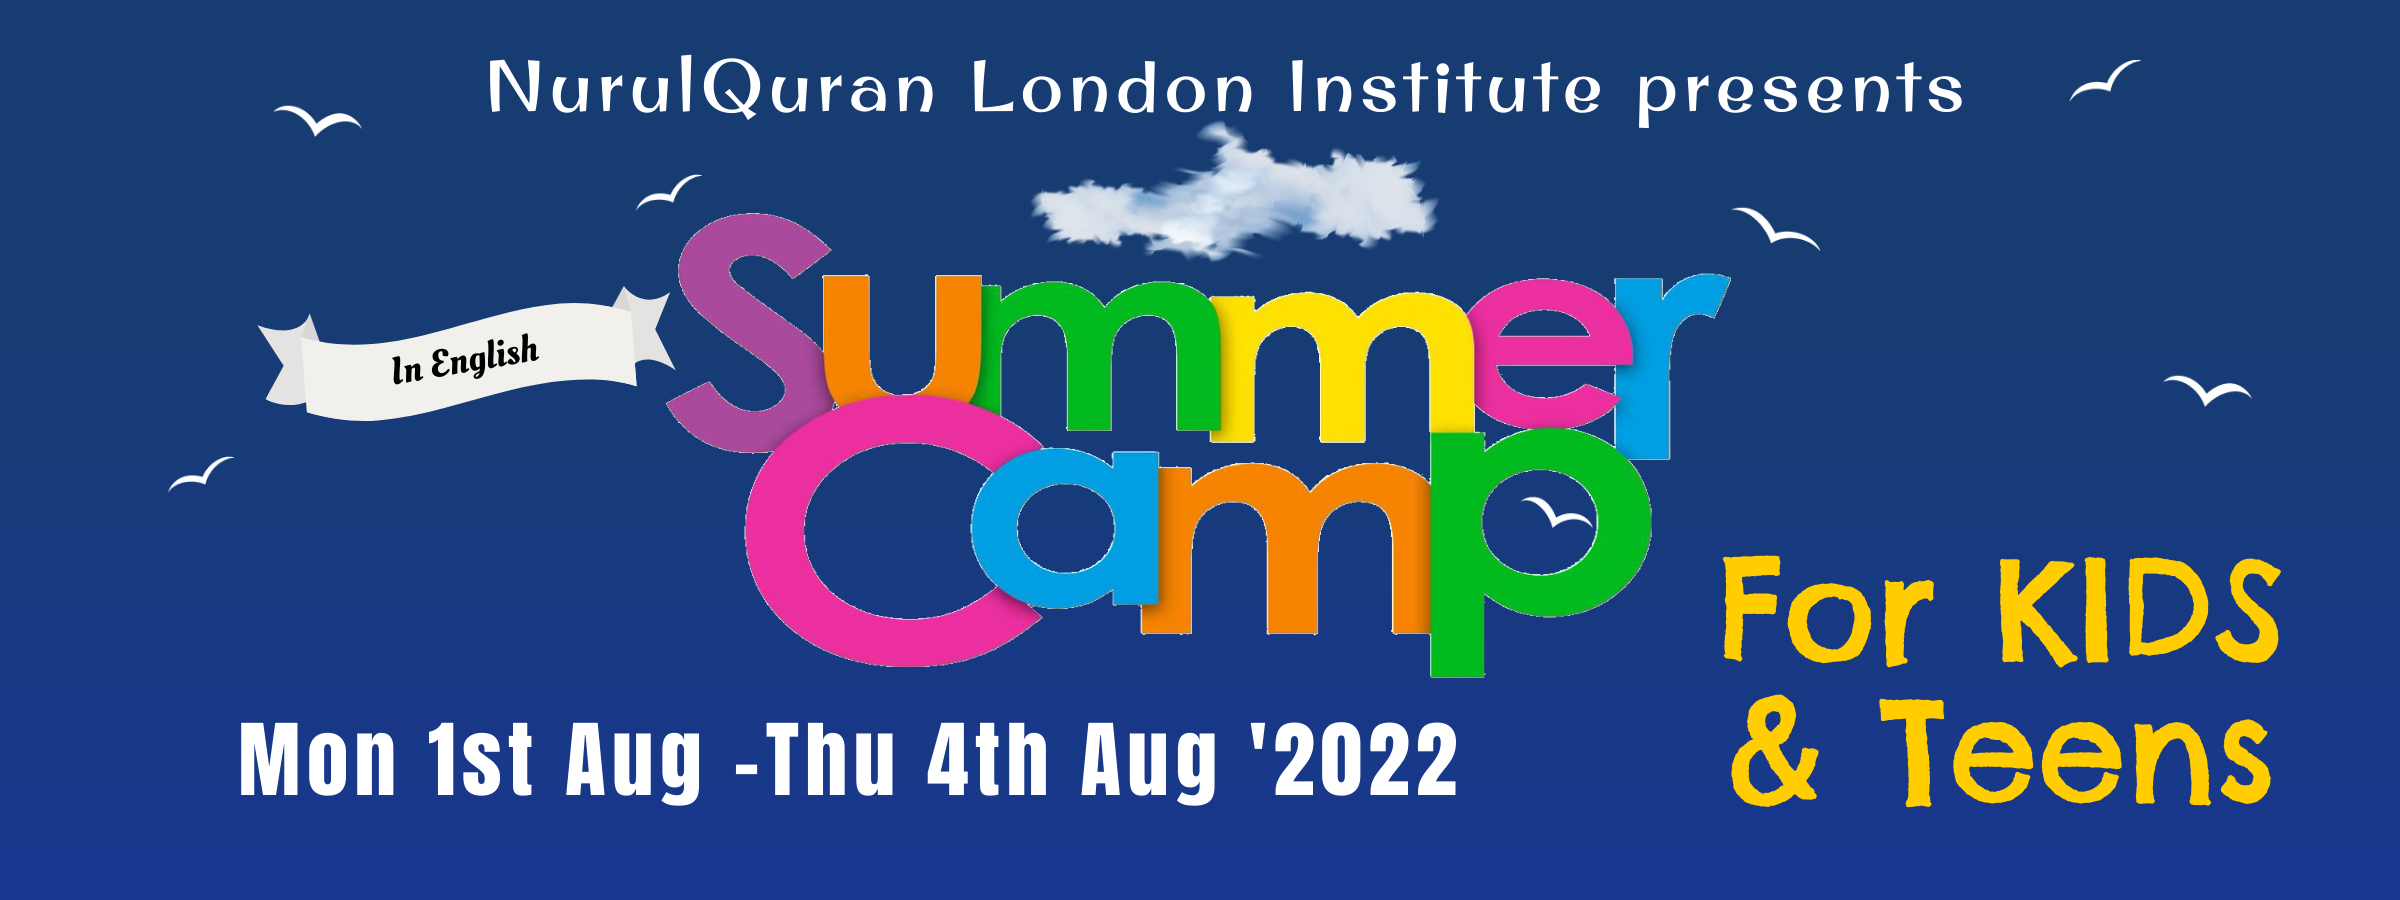 NQ London Kids Summer Camp